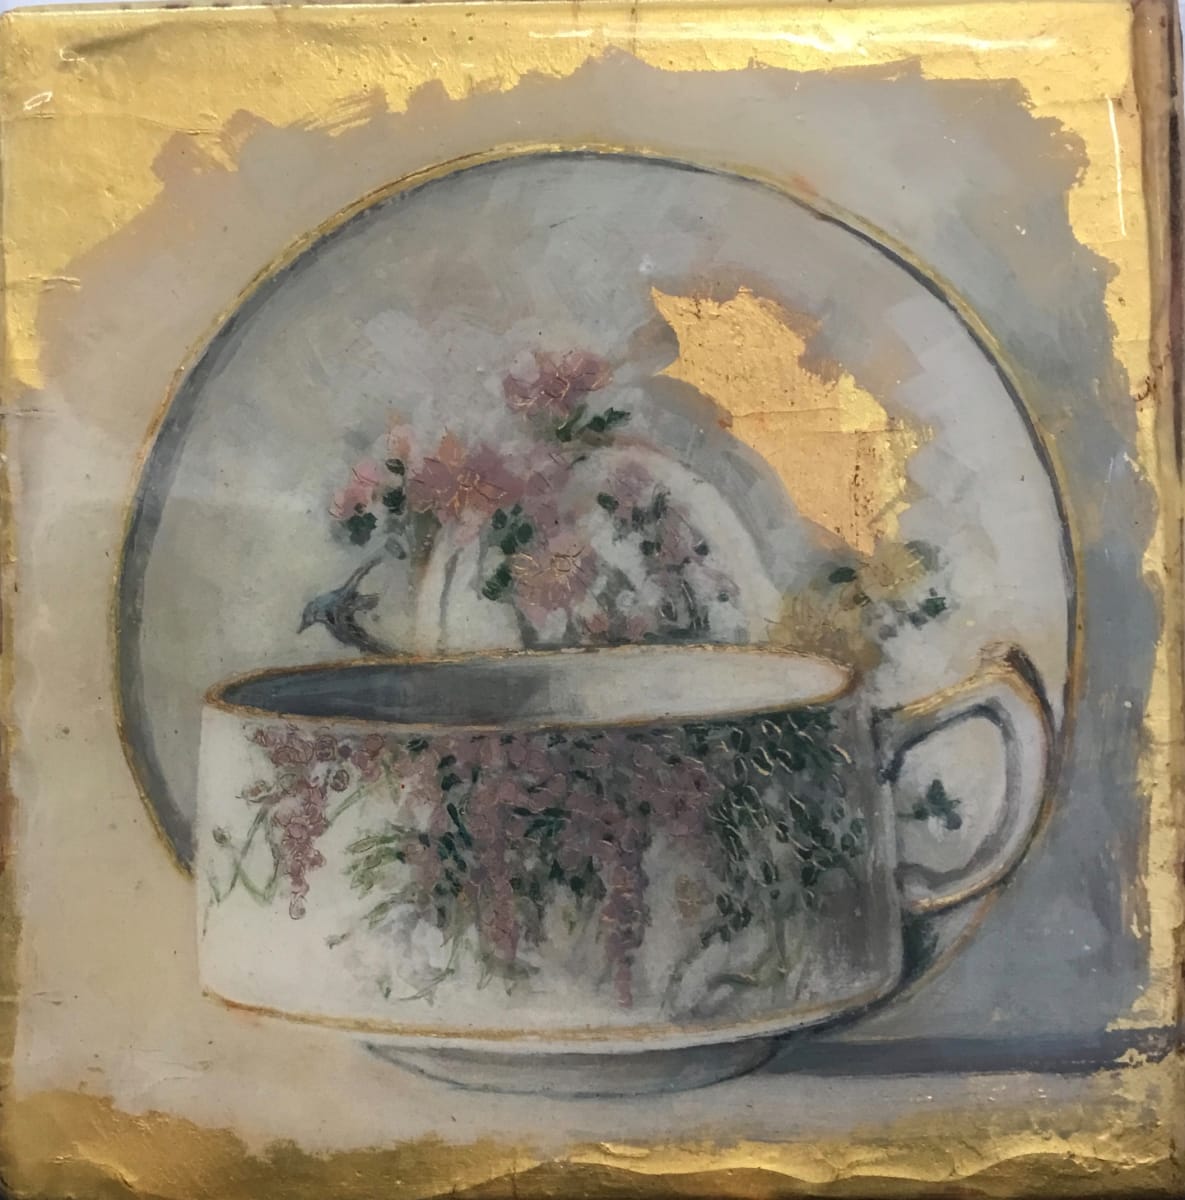 Antique Tea Cup by Josephine Josephsen  Image: Antique with gold cloisonne detail